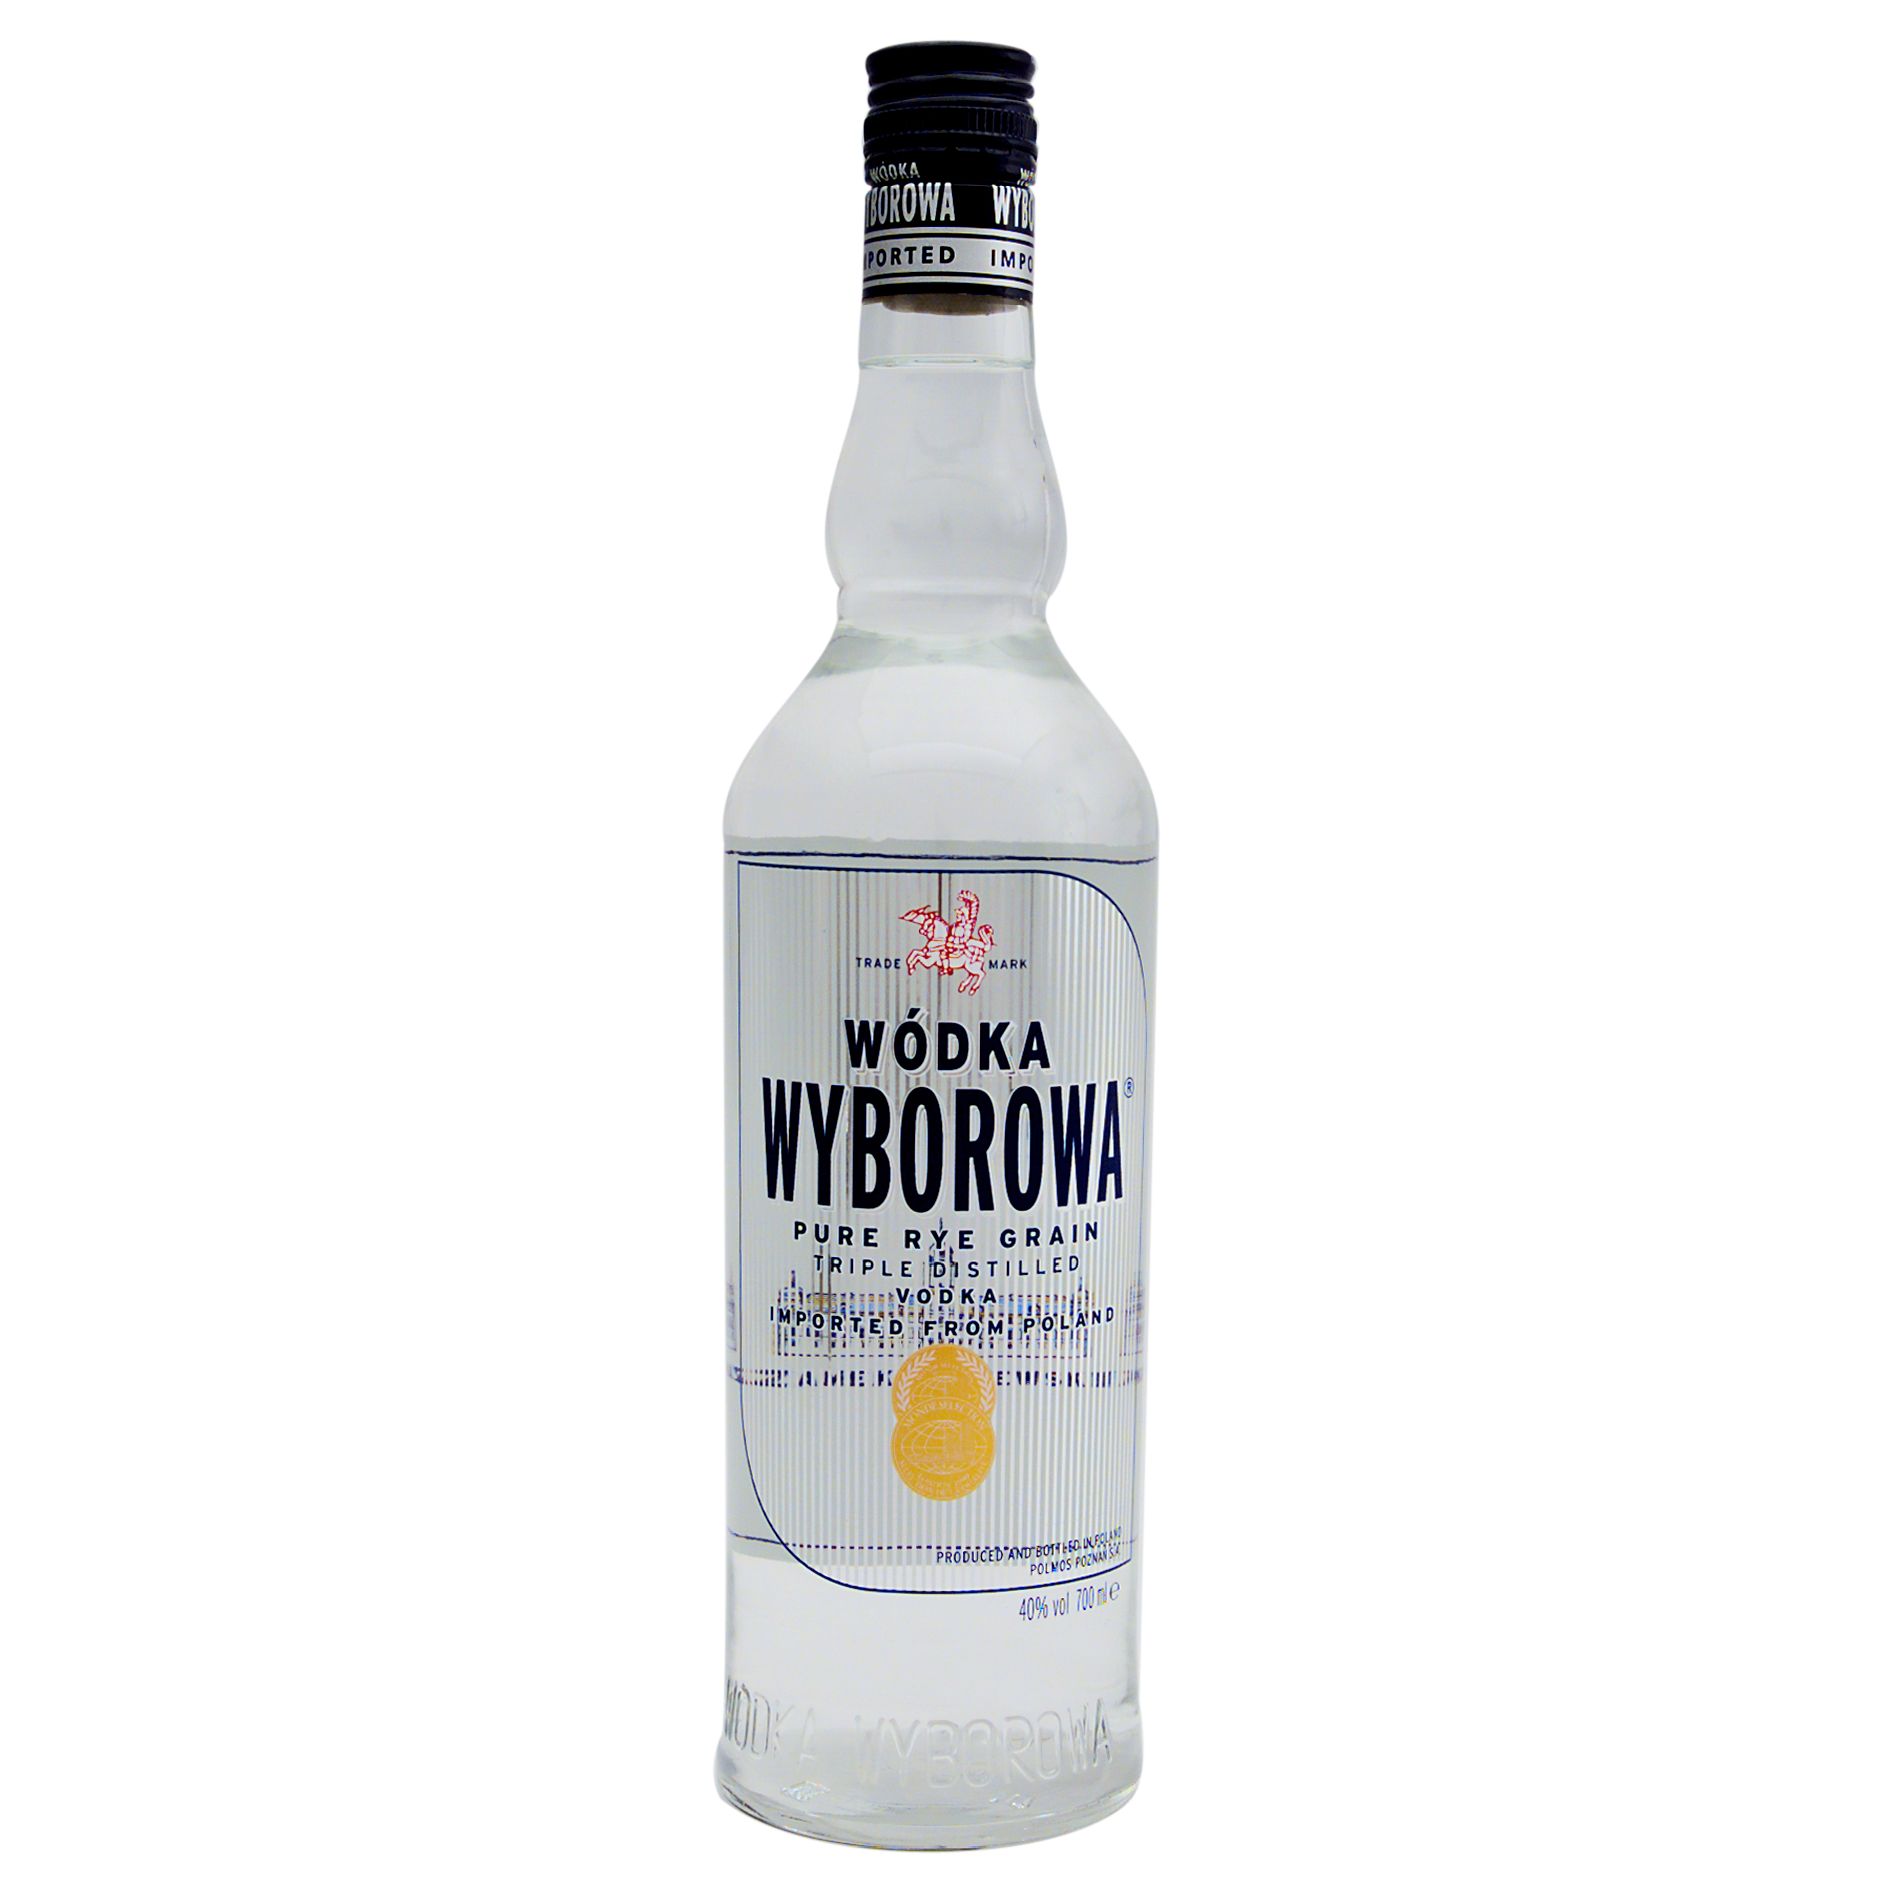 Wyborowa Vodka at John Lewis